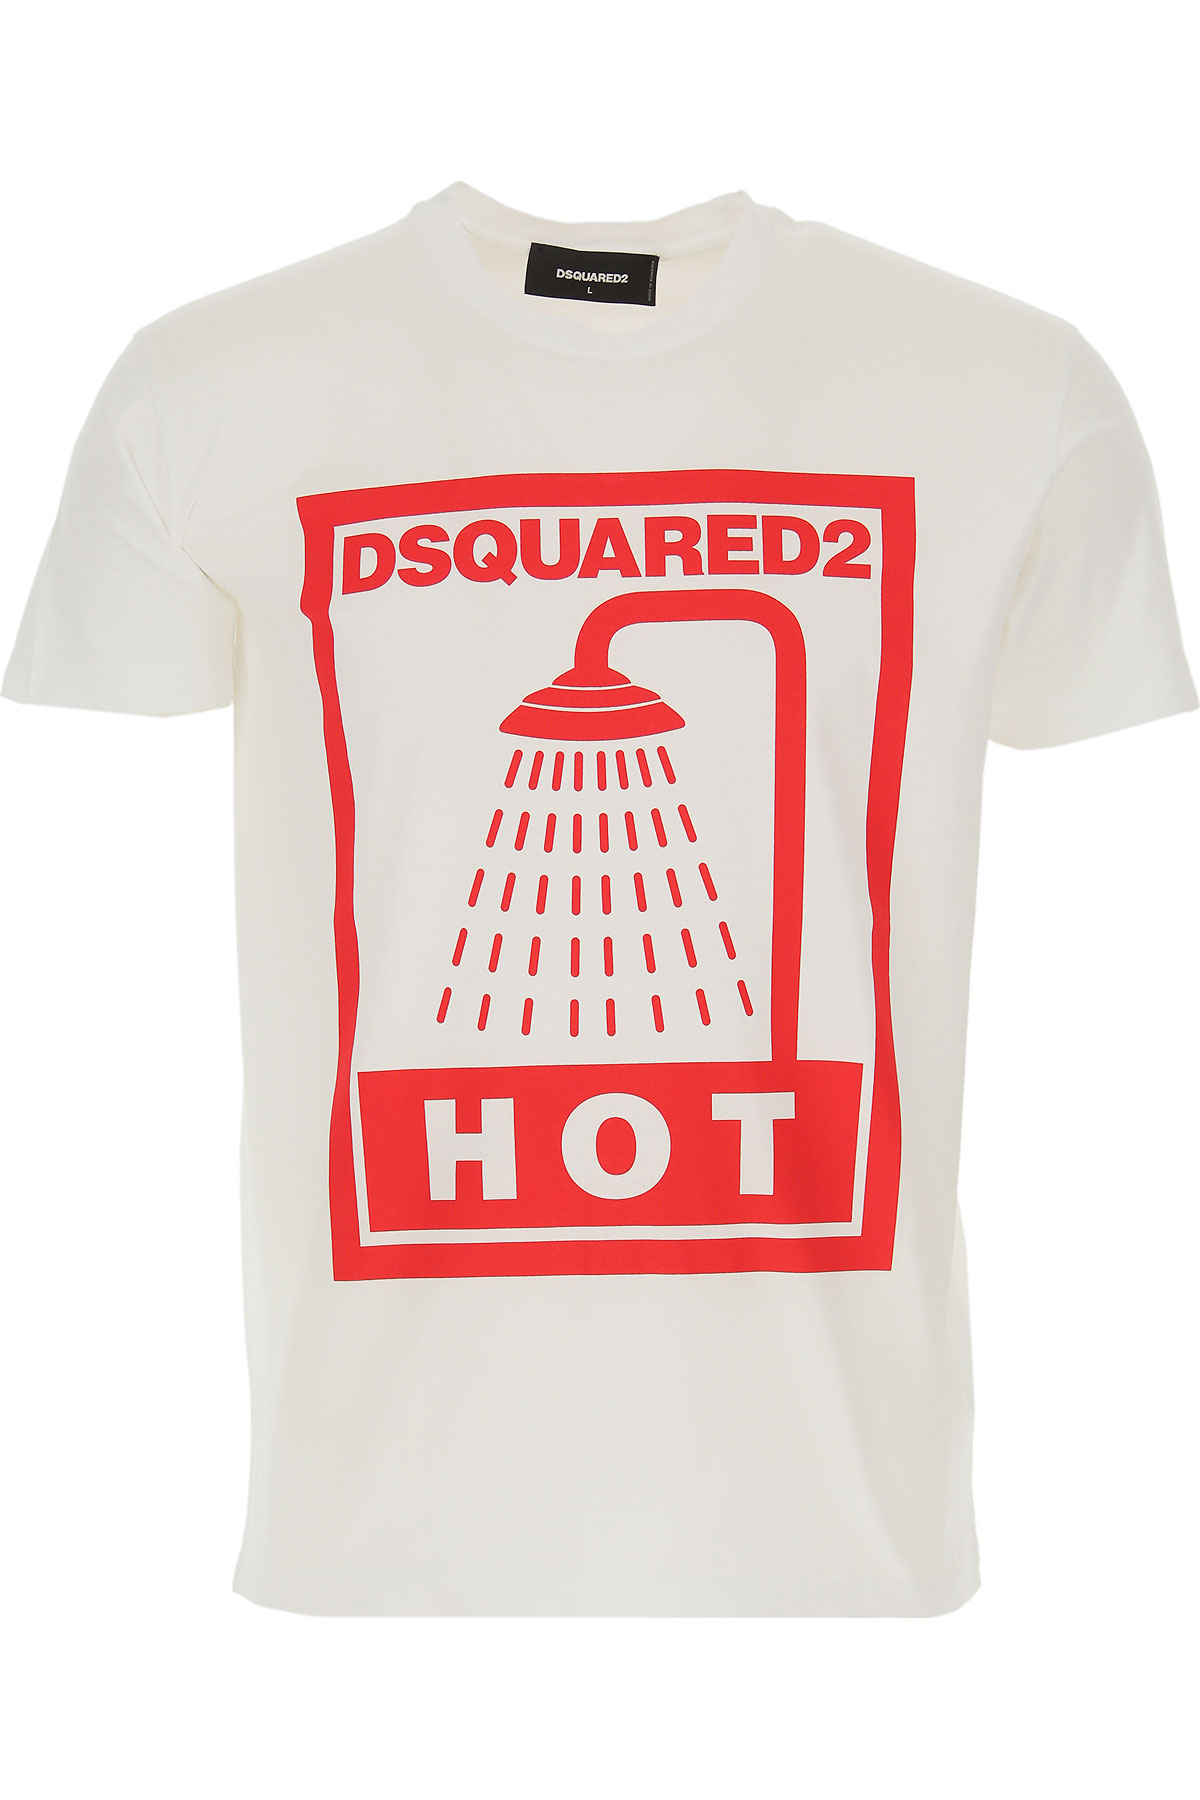 dsquared2 2019 t shirt